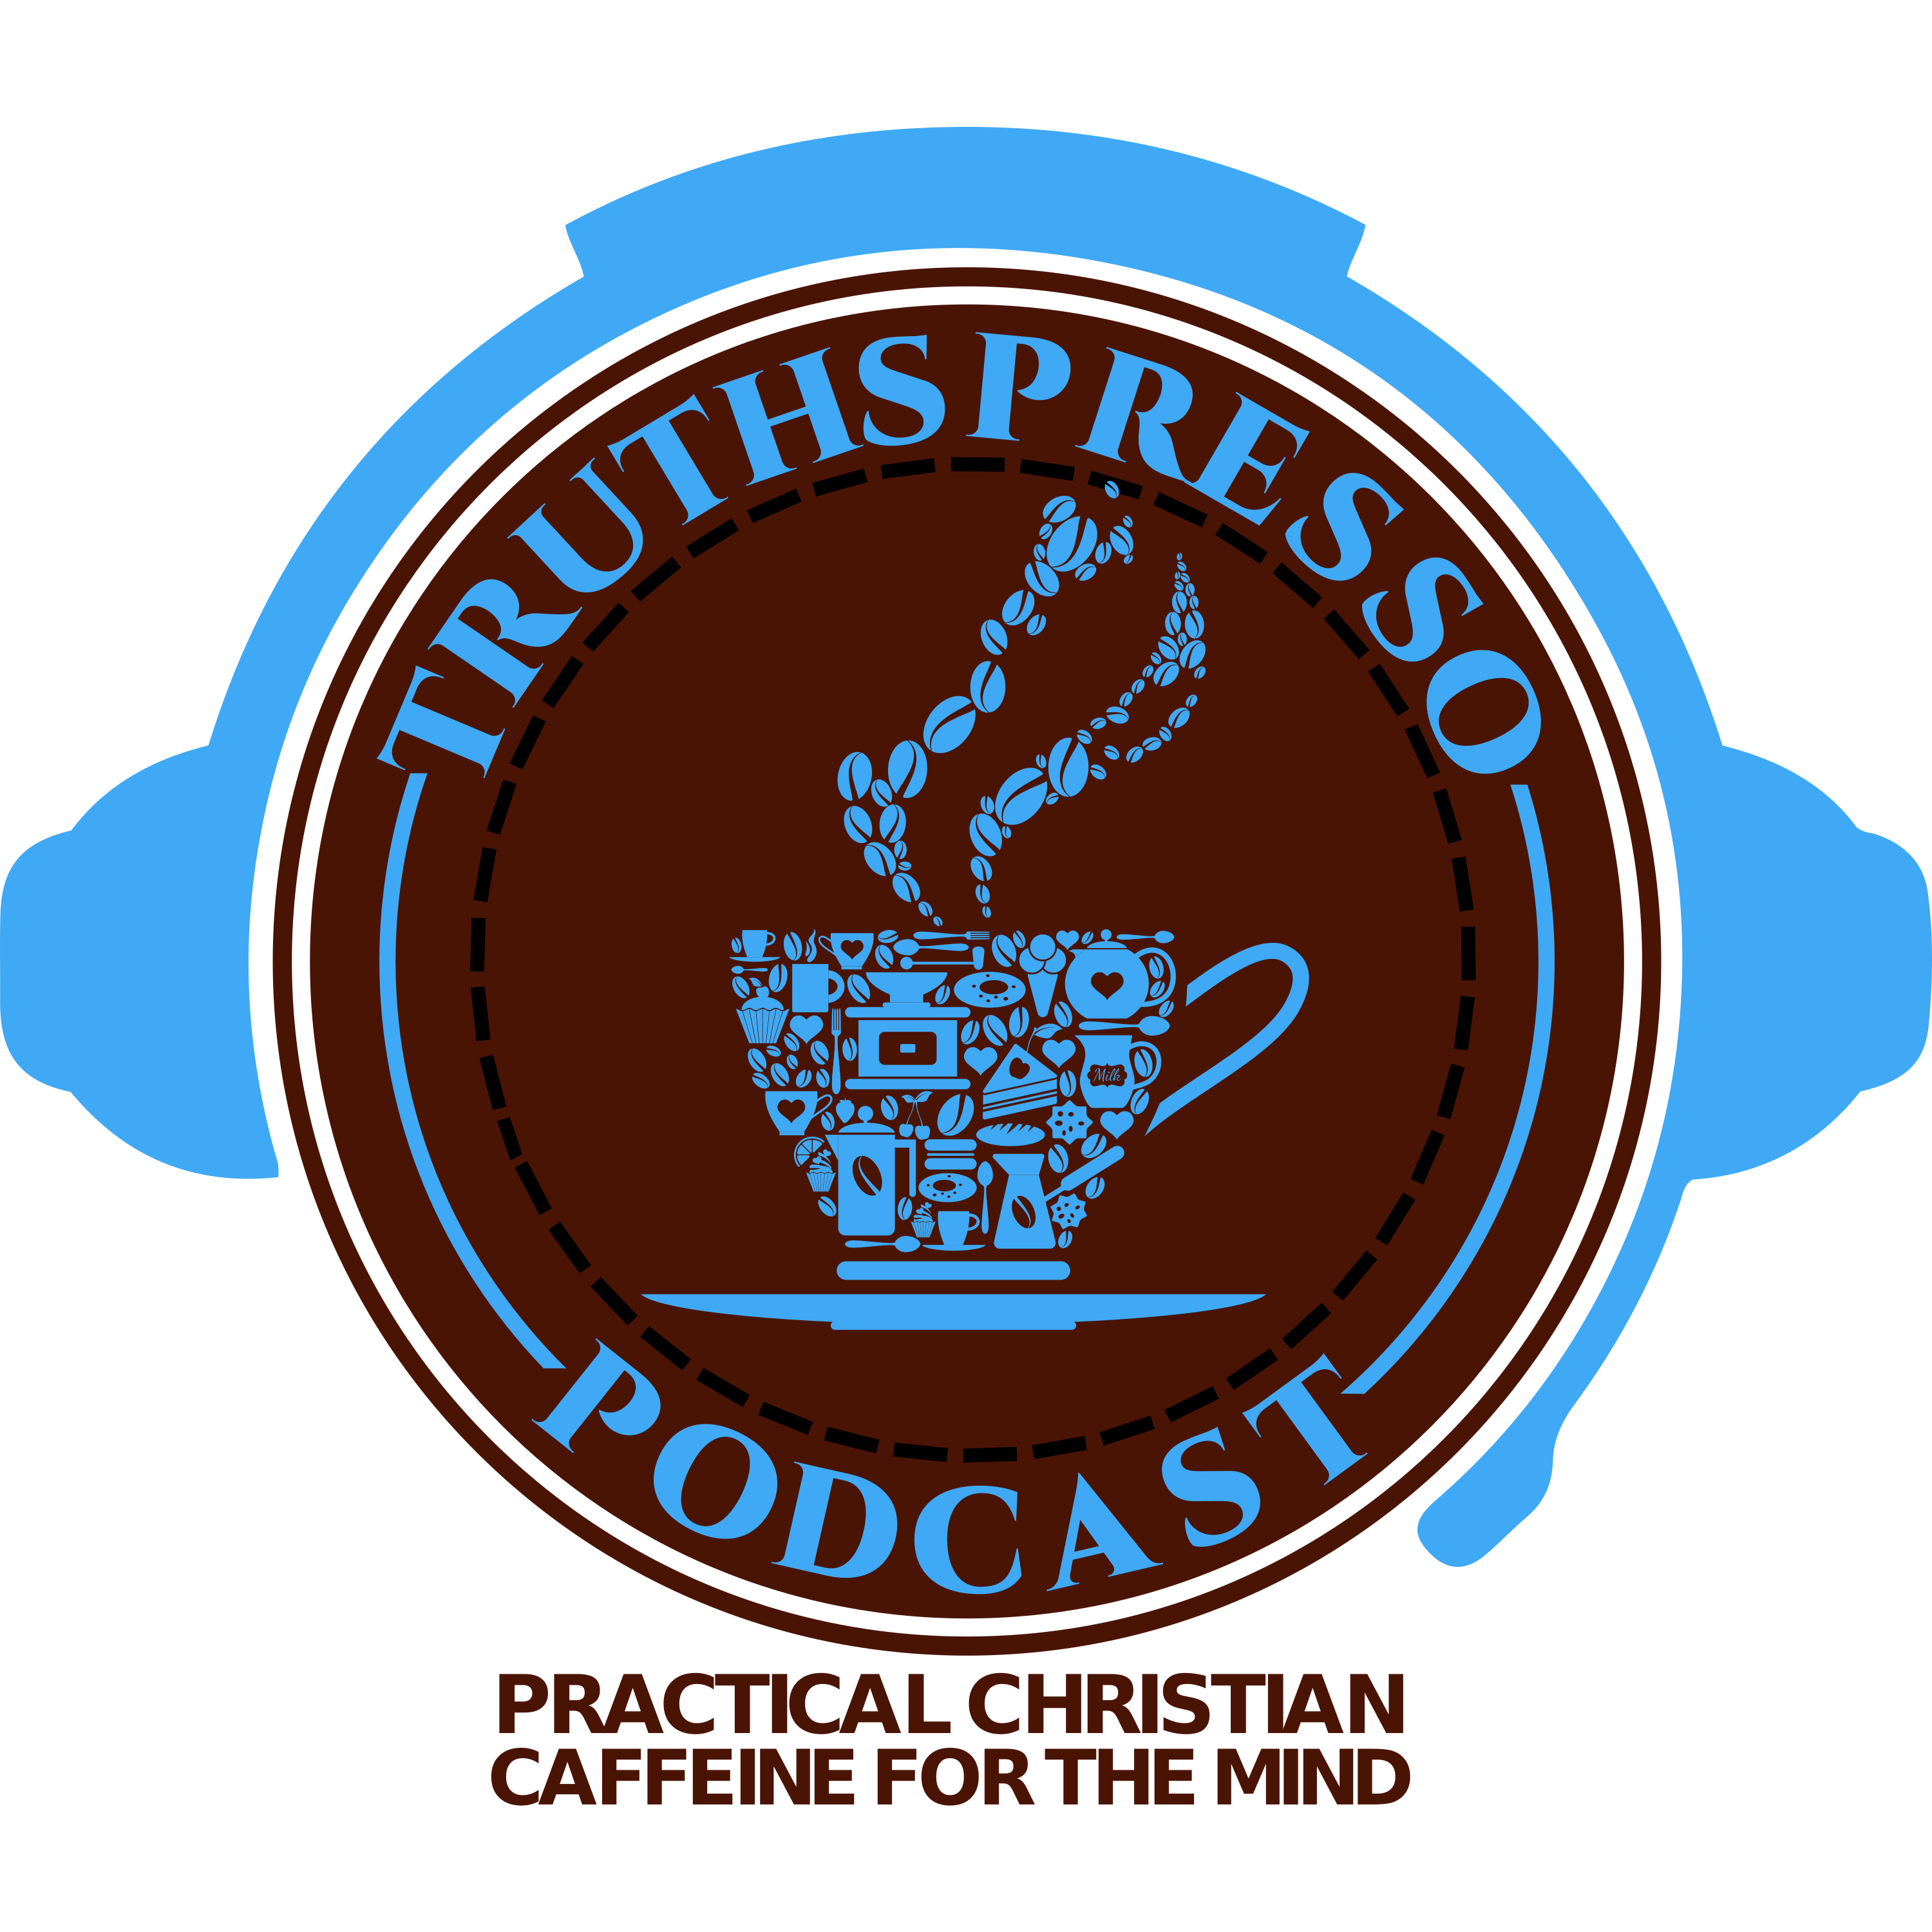 Artwork for podcast Truthspresso